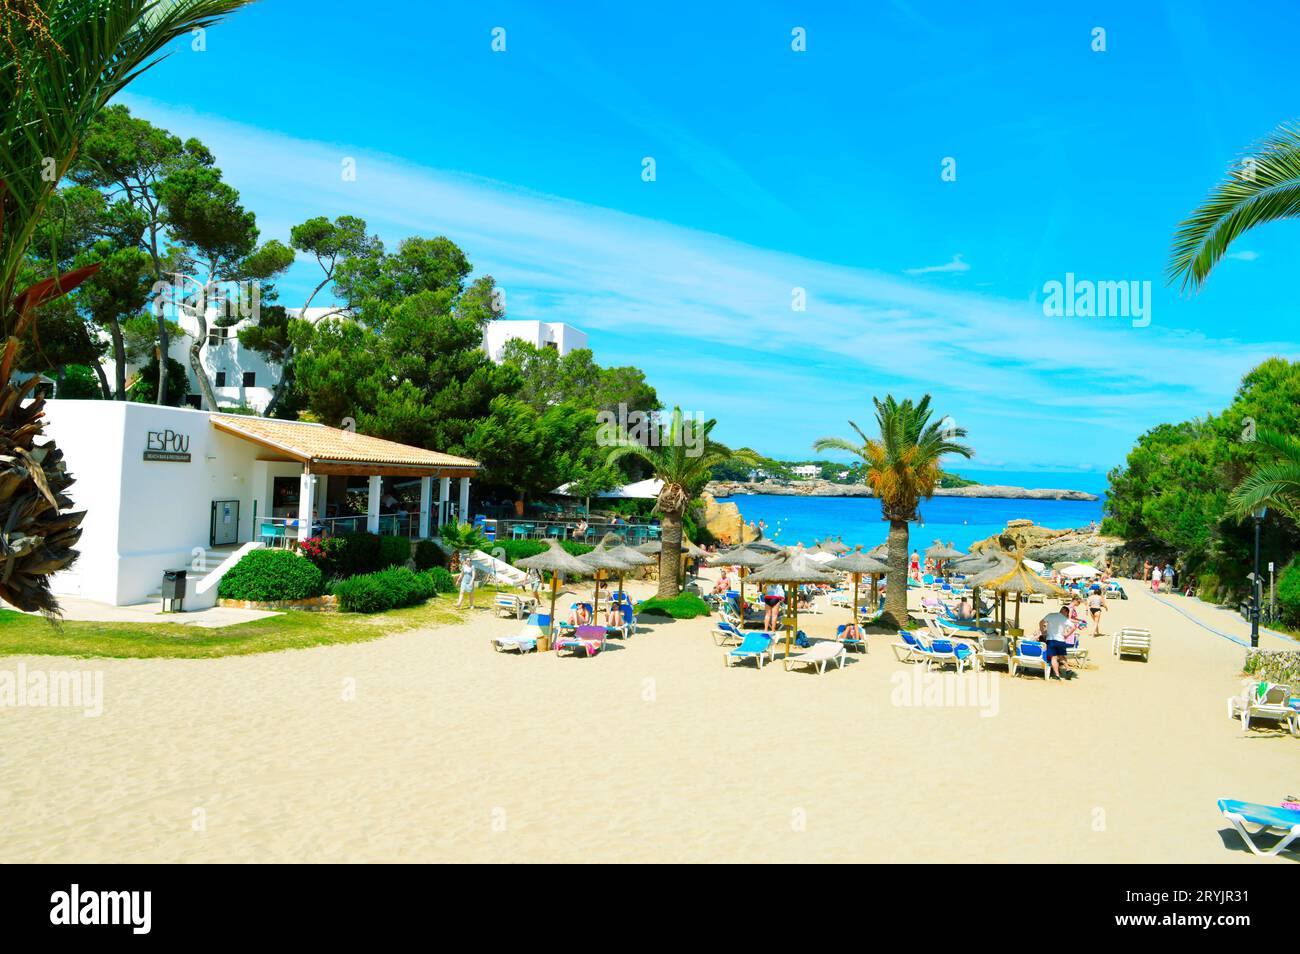 ESPOU Beach bar and restaurant on Cala des Pou beach in Cala D’or in Majorca, a Spanish island in tsland Stock Photo